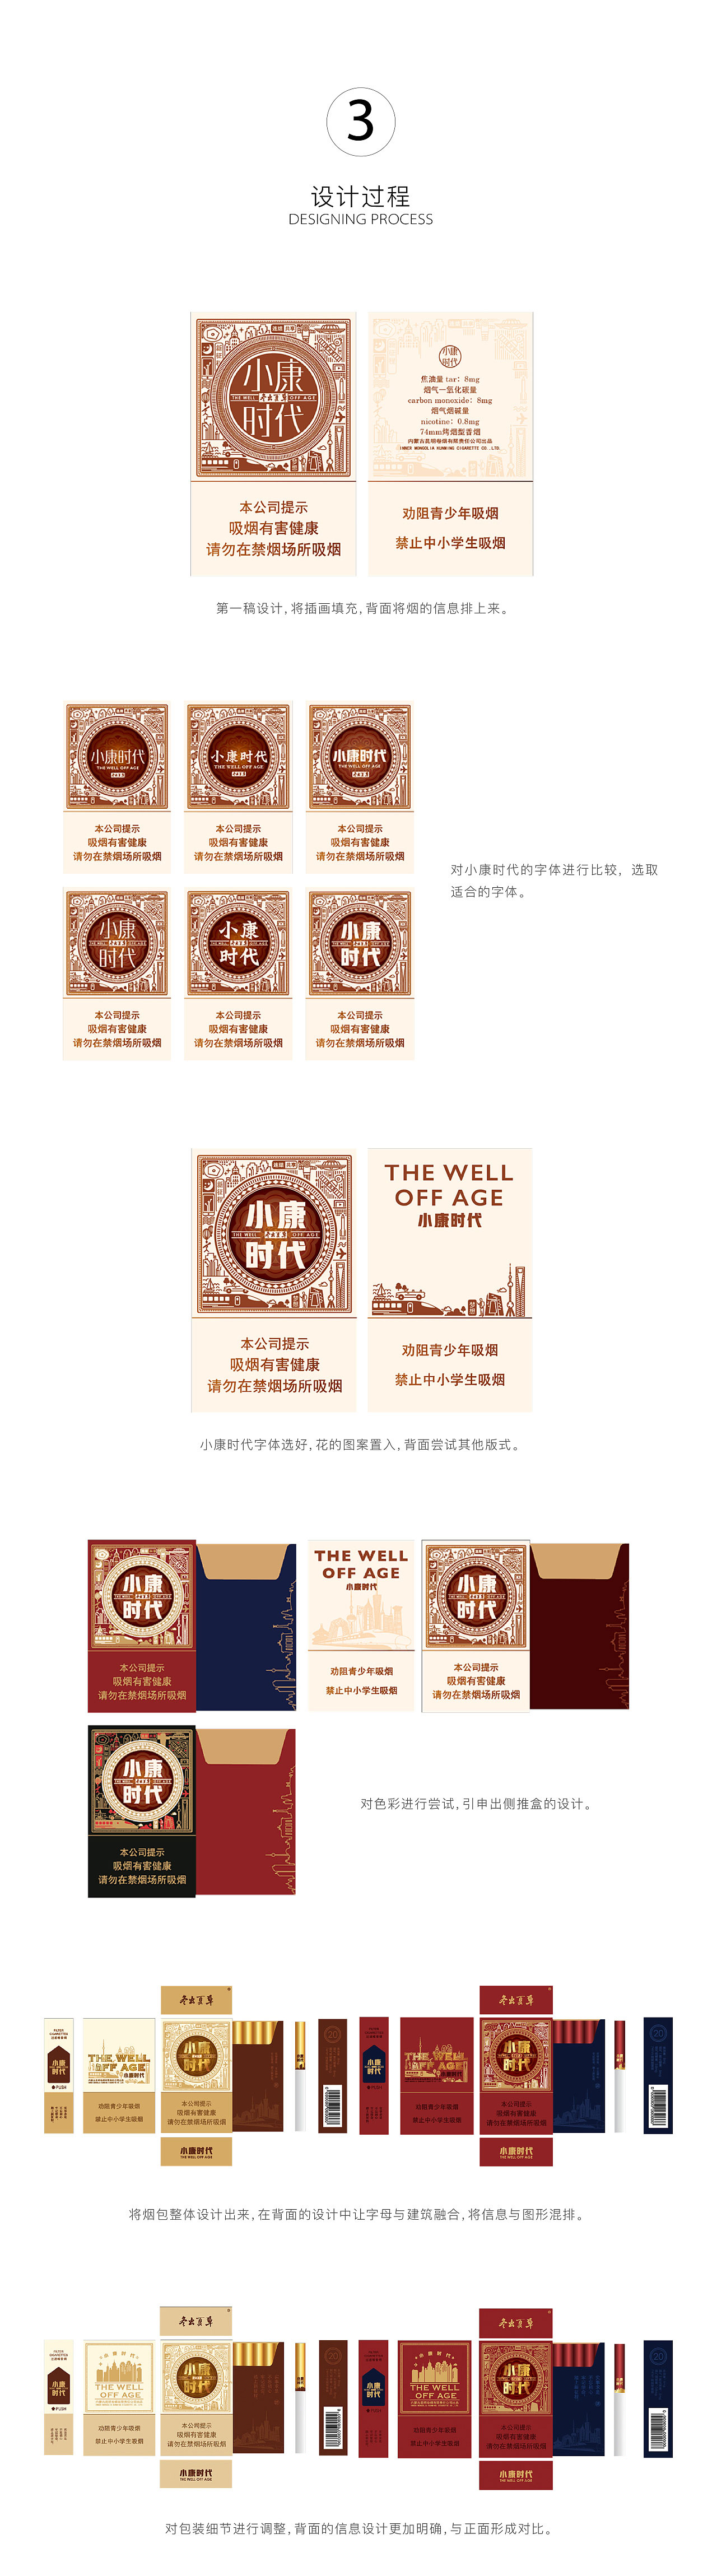 Commemorative cigarette packaging design in the well-off era